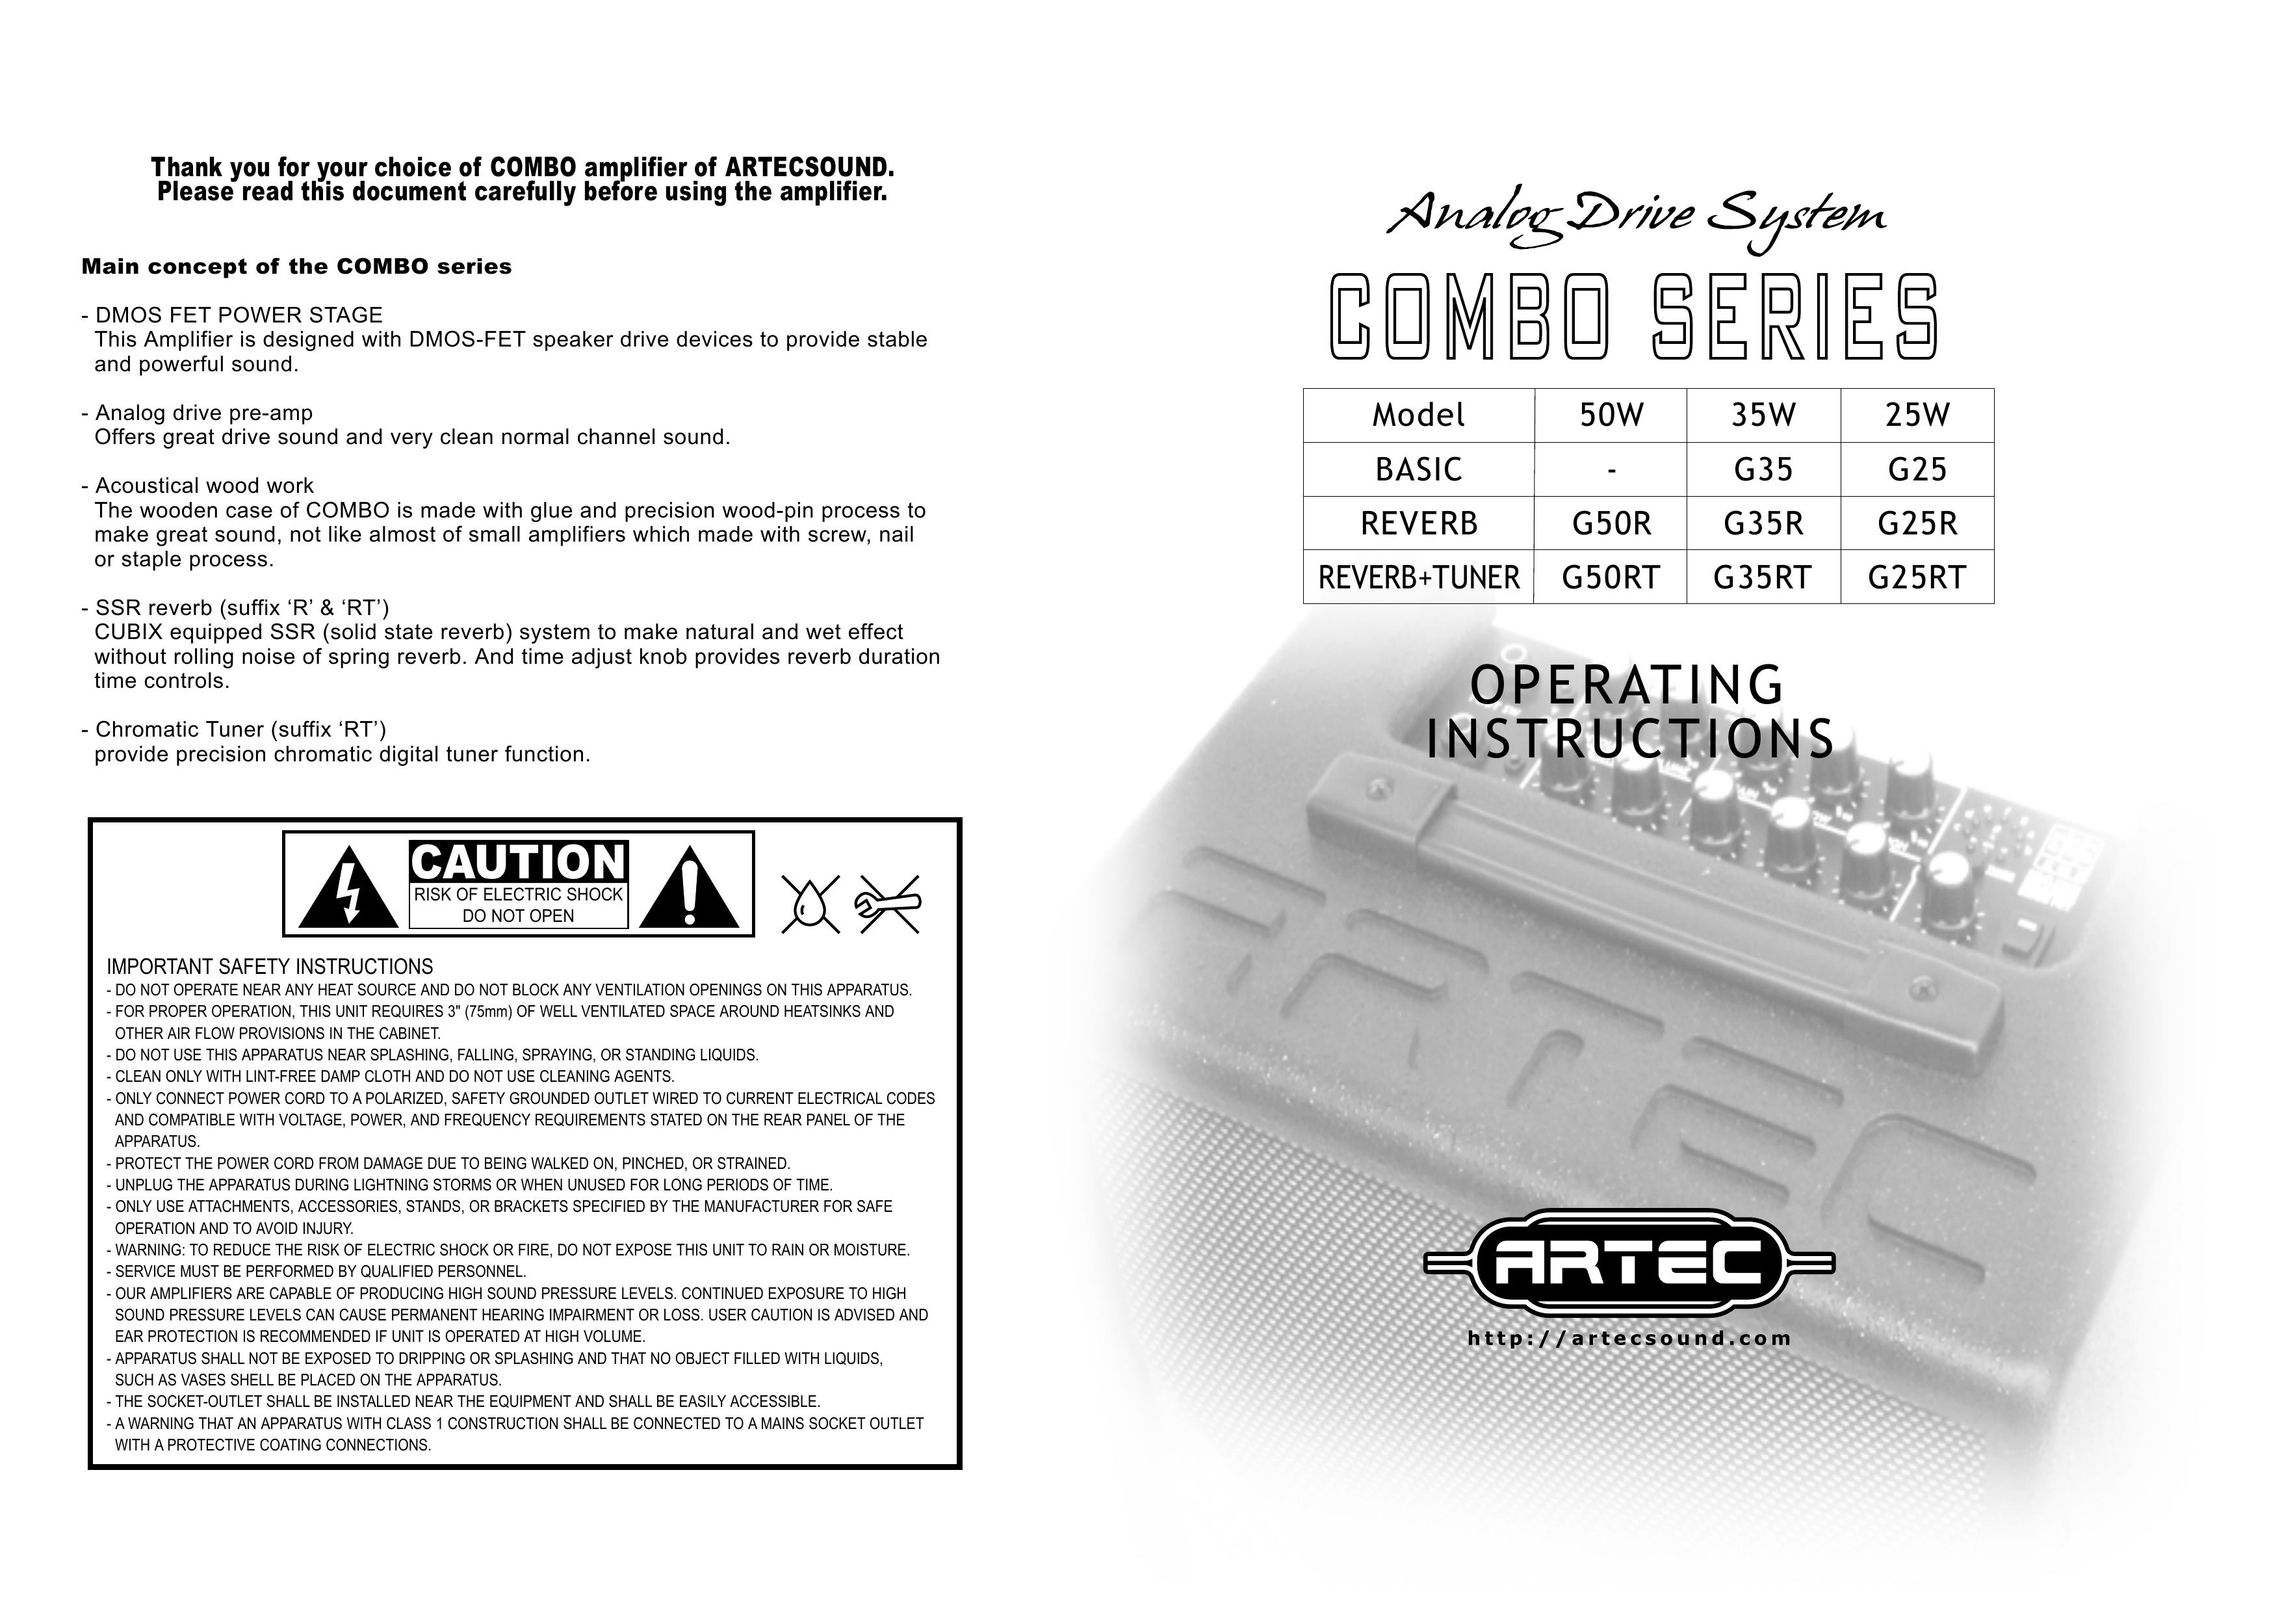 Artech USA 25W Range User Manual